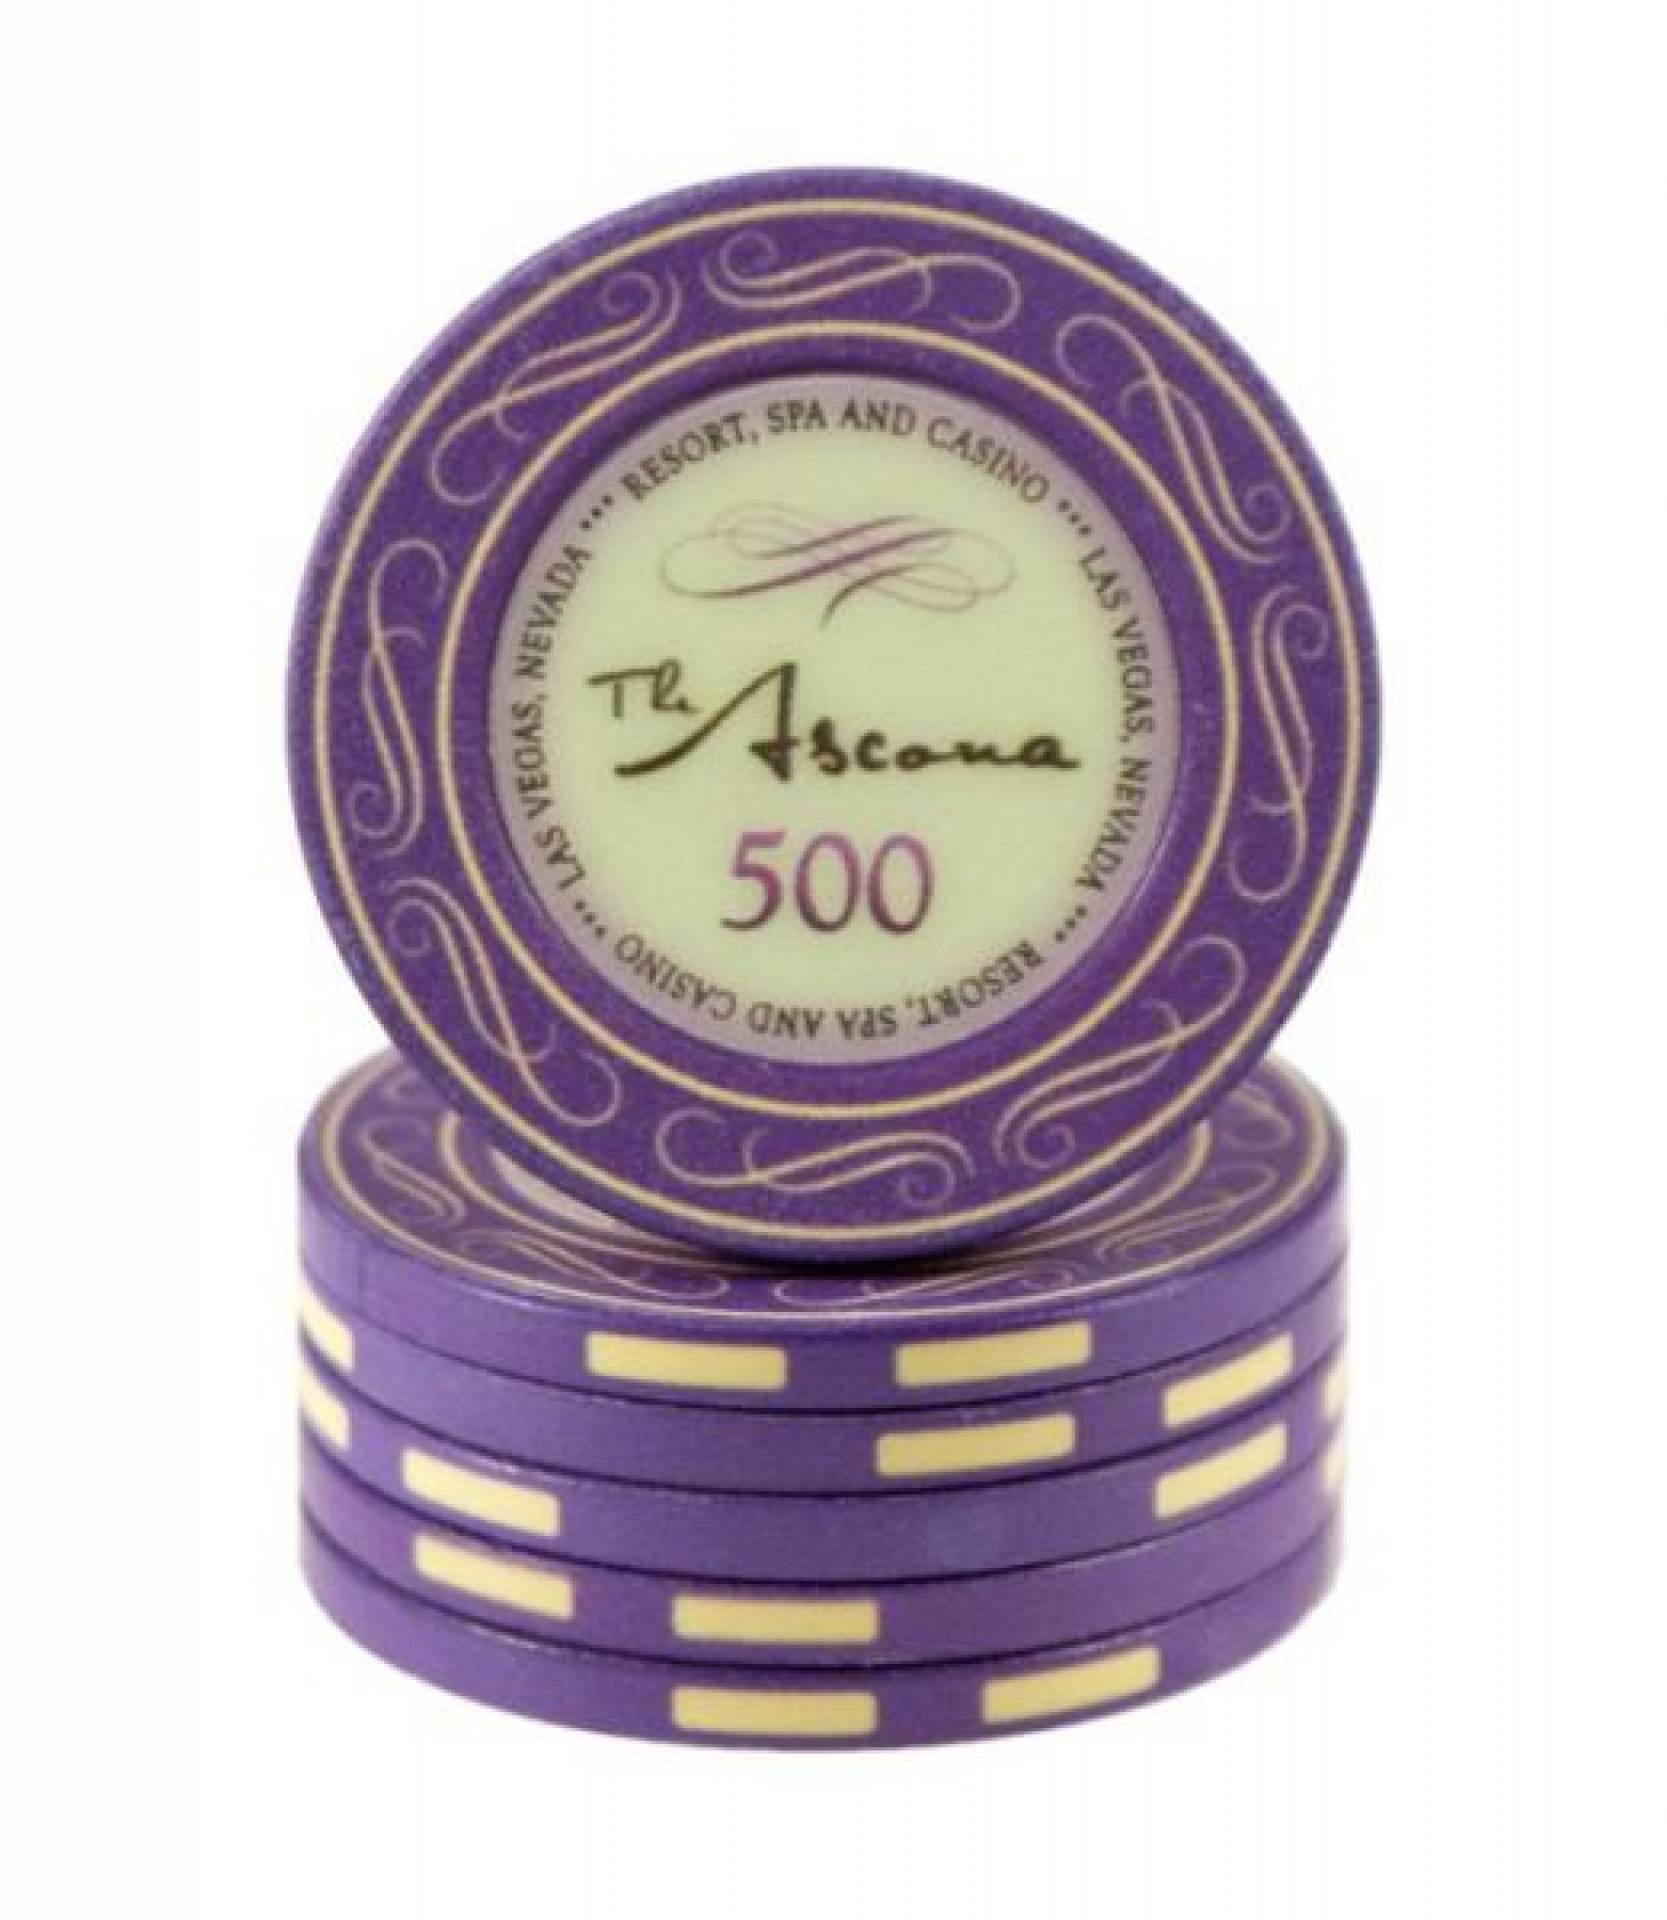 Poker chip The Ascona - hodnota 500